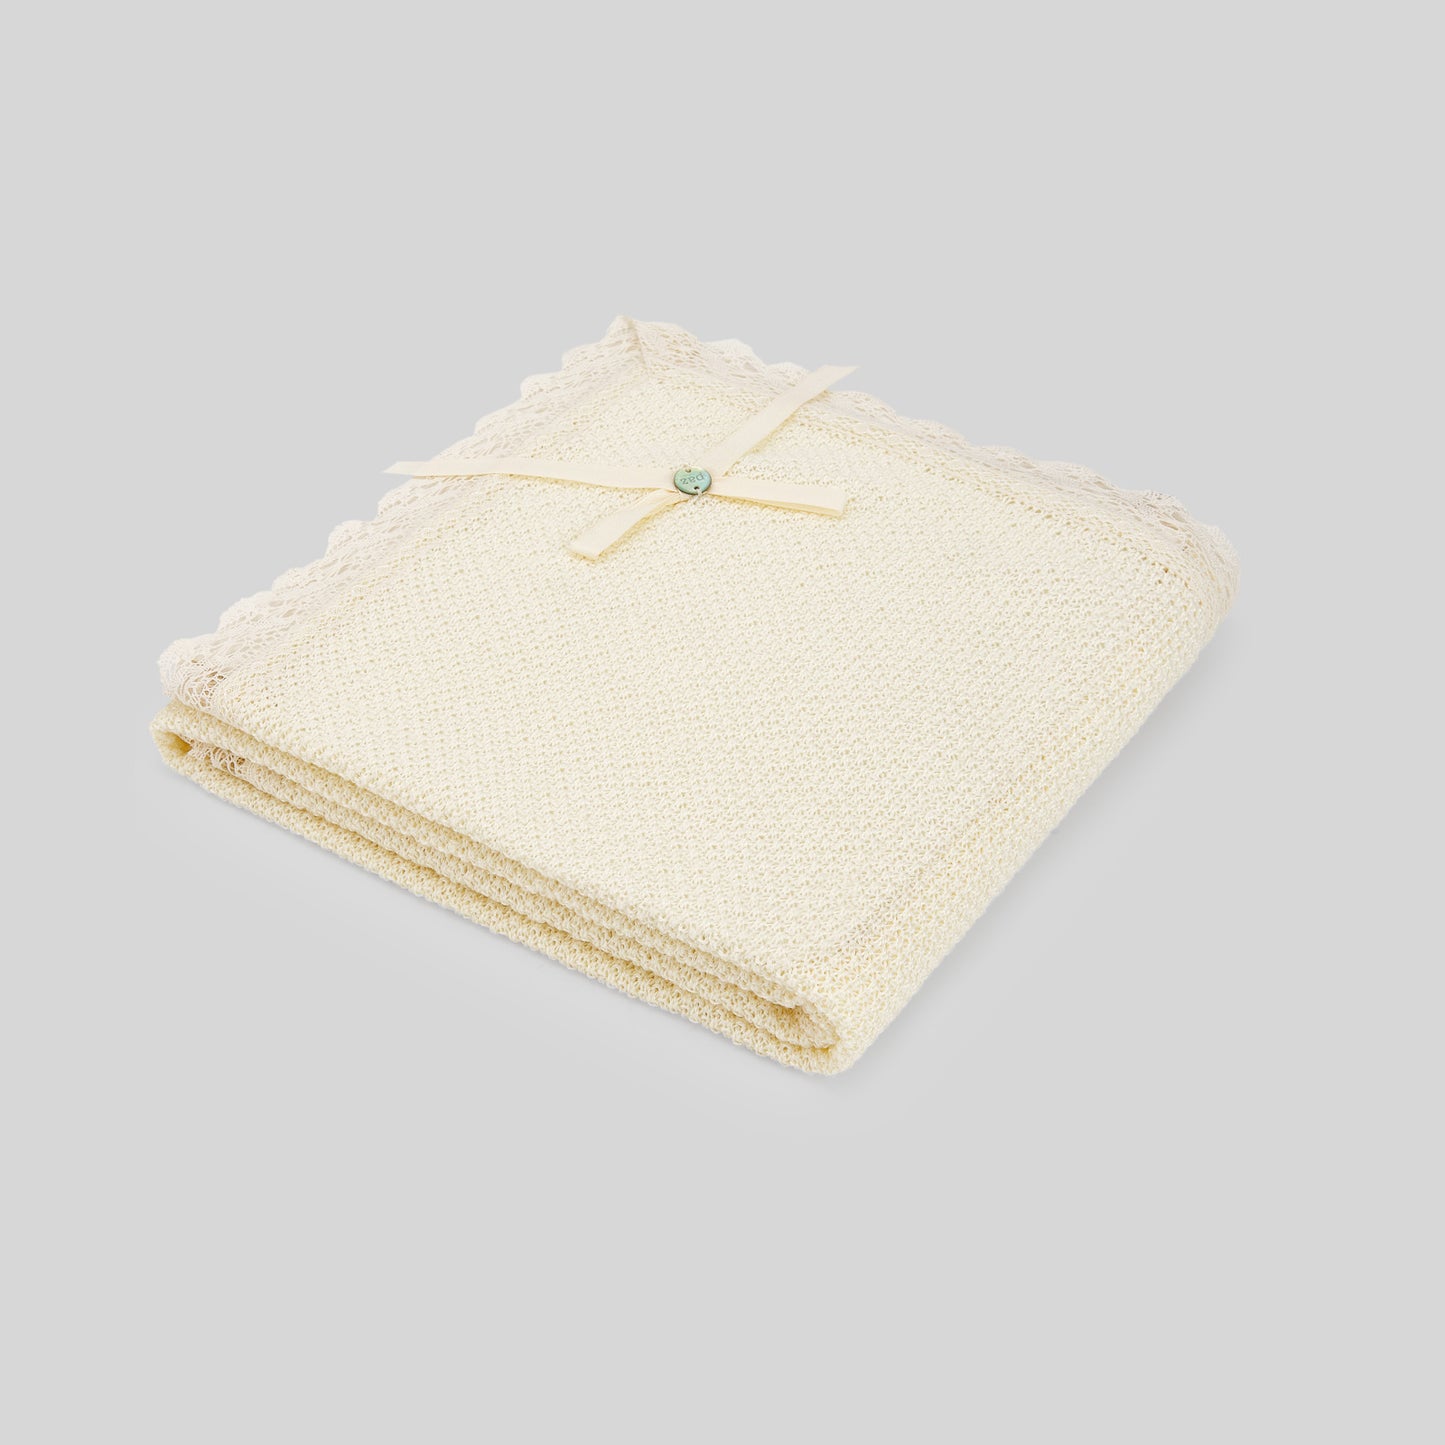 PAZ RODRIGUEZ Ivory Cotton Thread Shawl Blanket